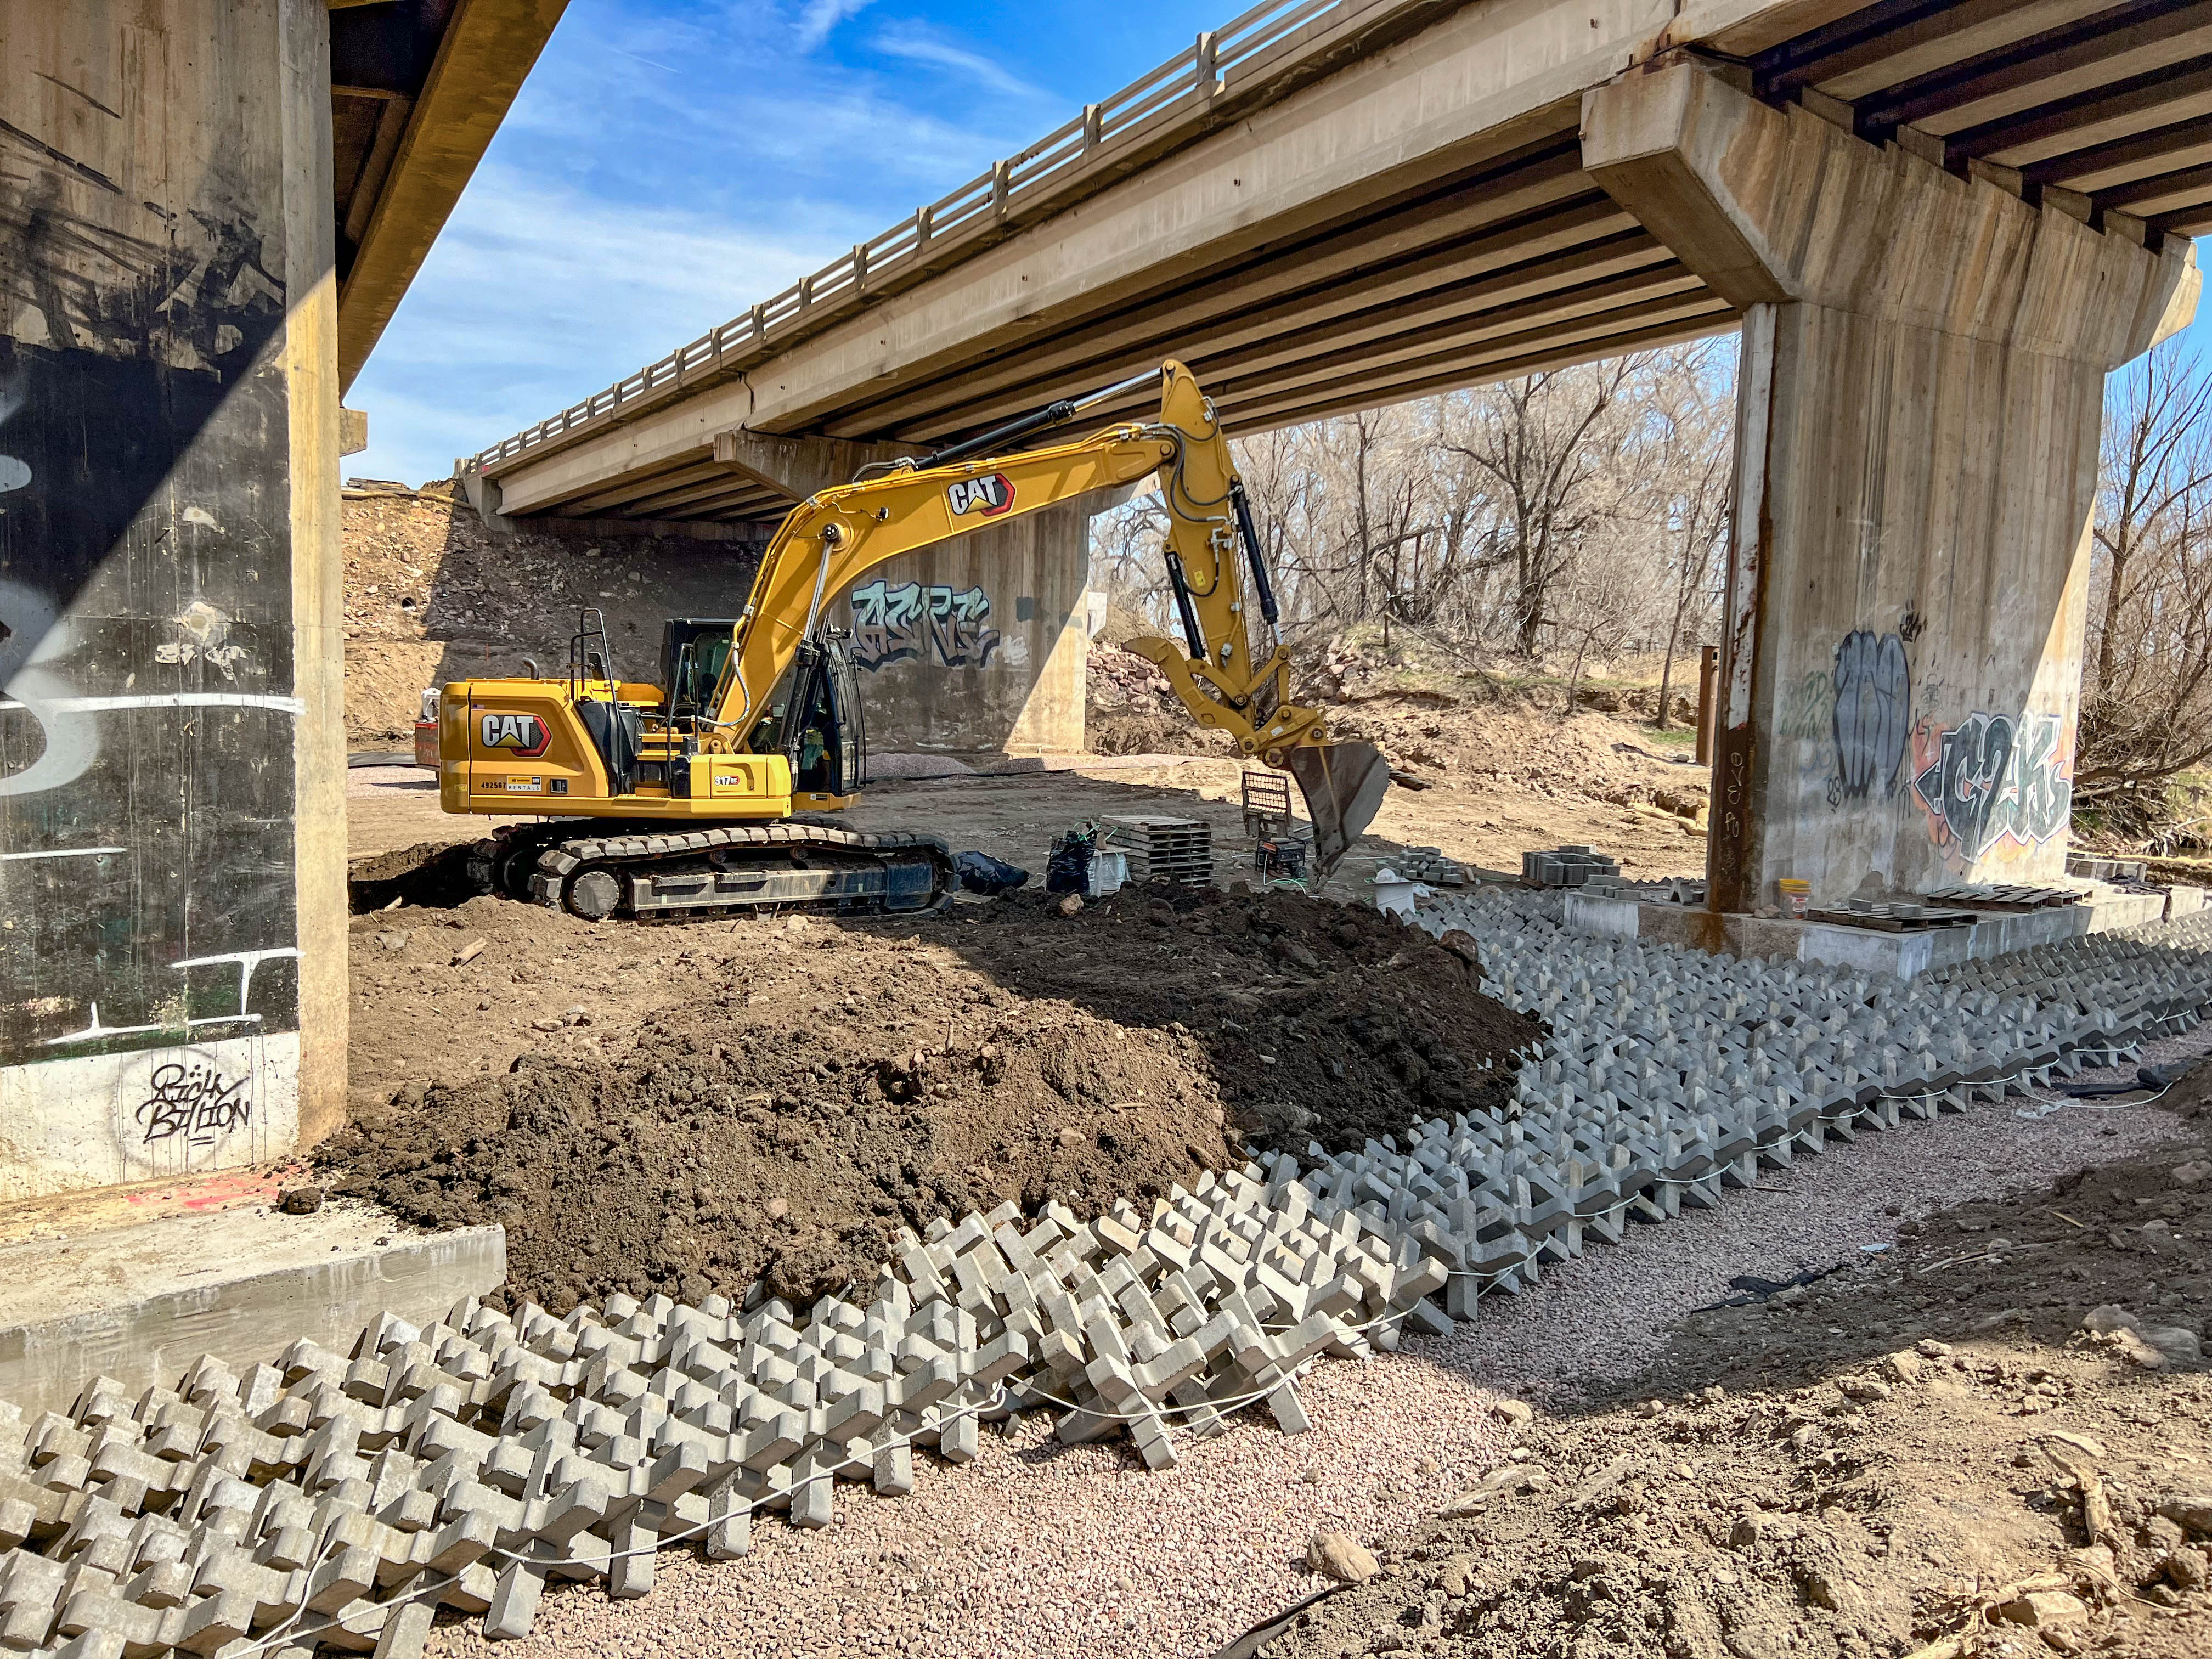 S Academy Bridge_Fountain Creek_excavator covering Ajacks.jpg detail image